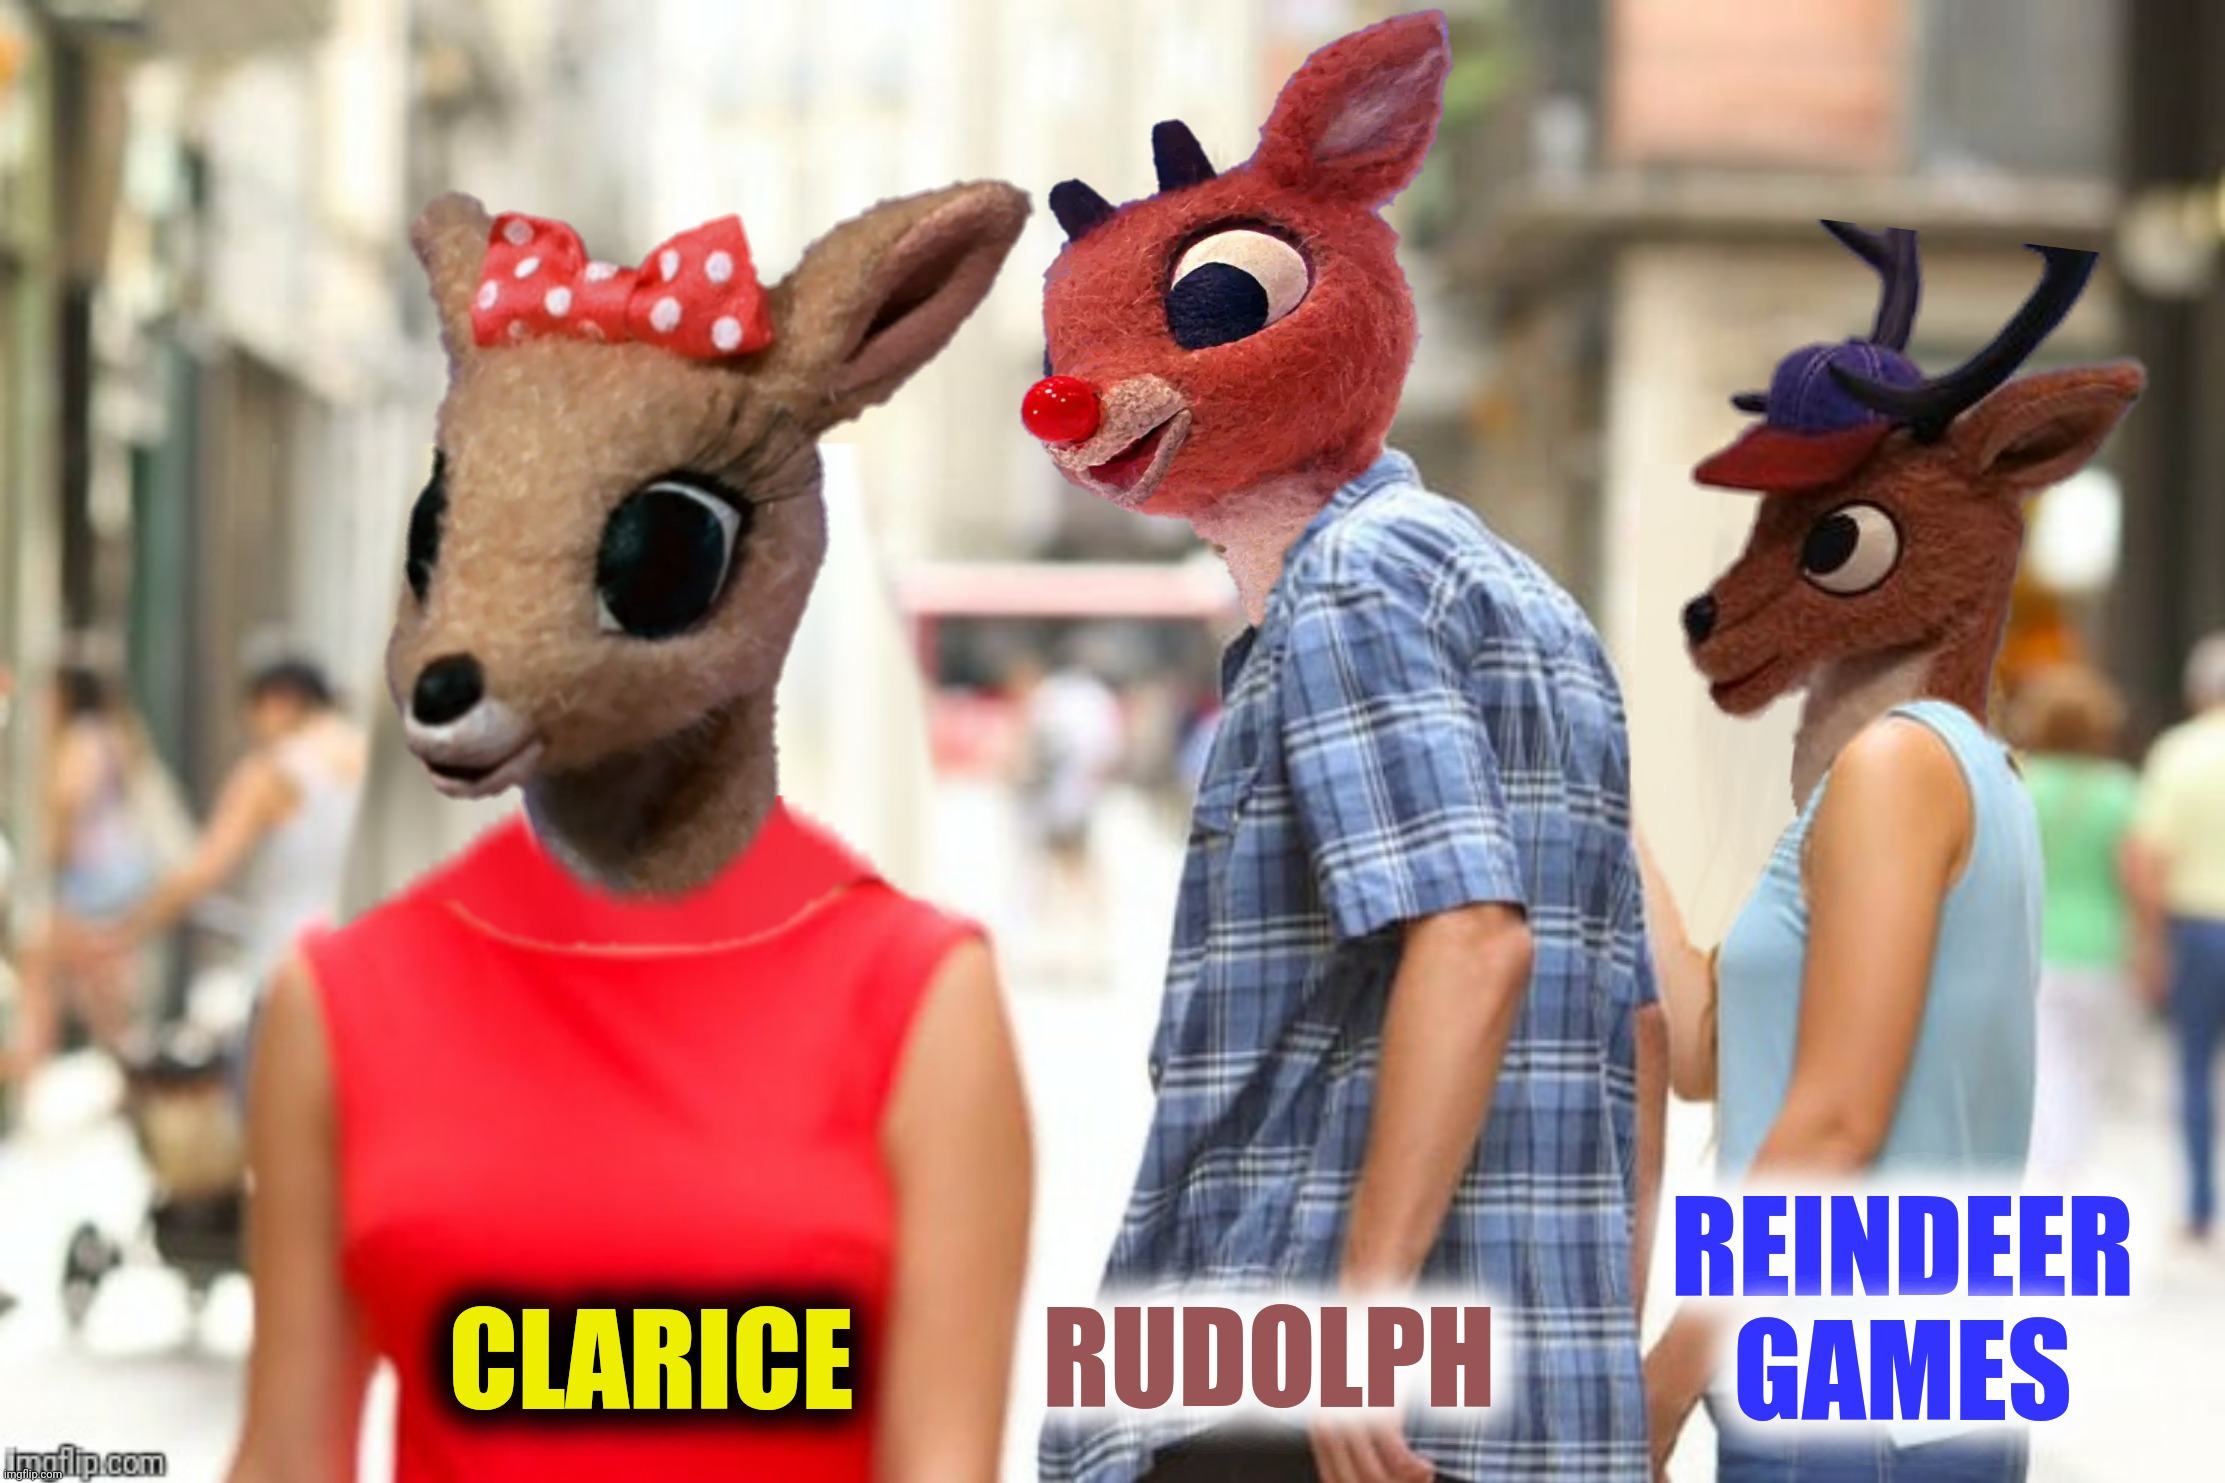 hello clarice rudolph